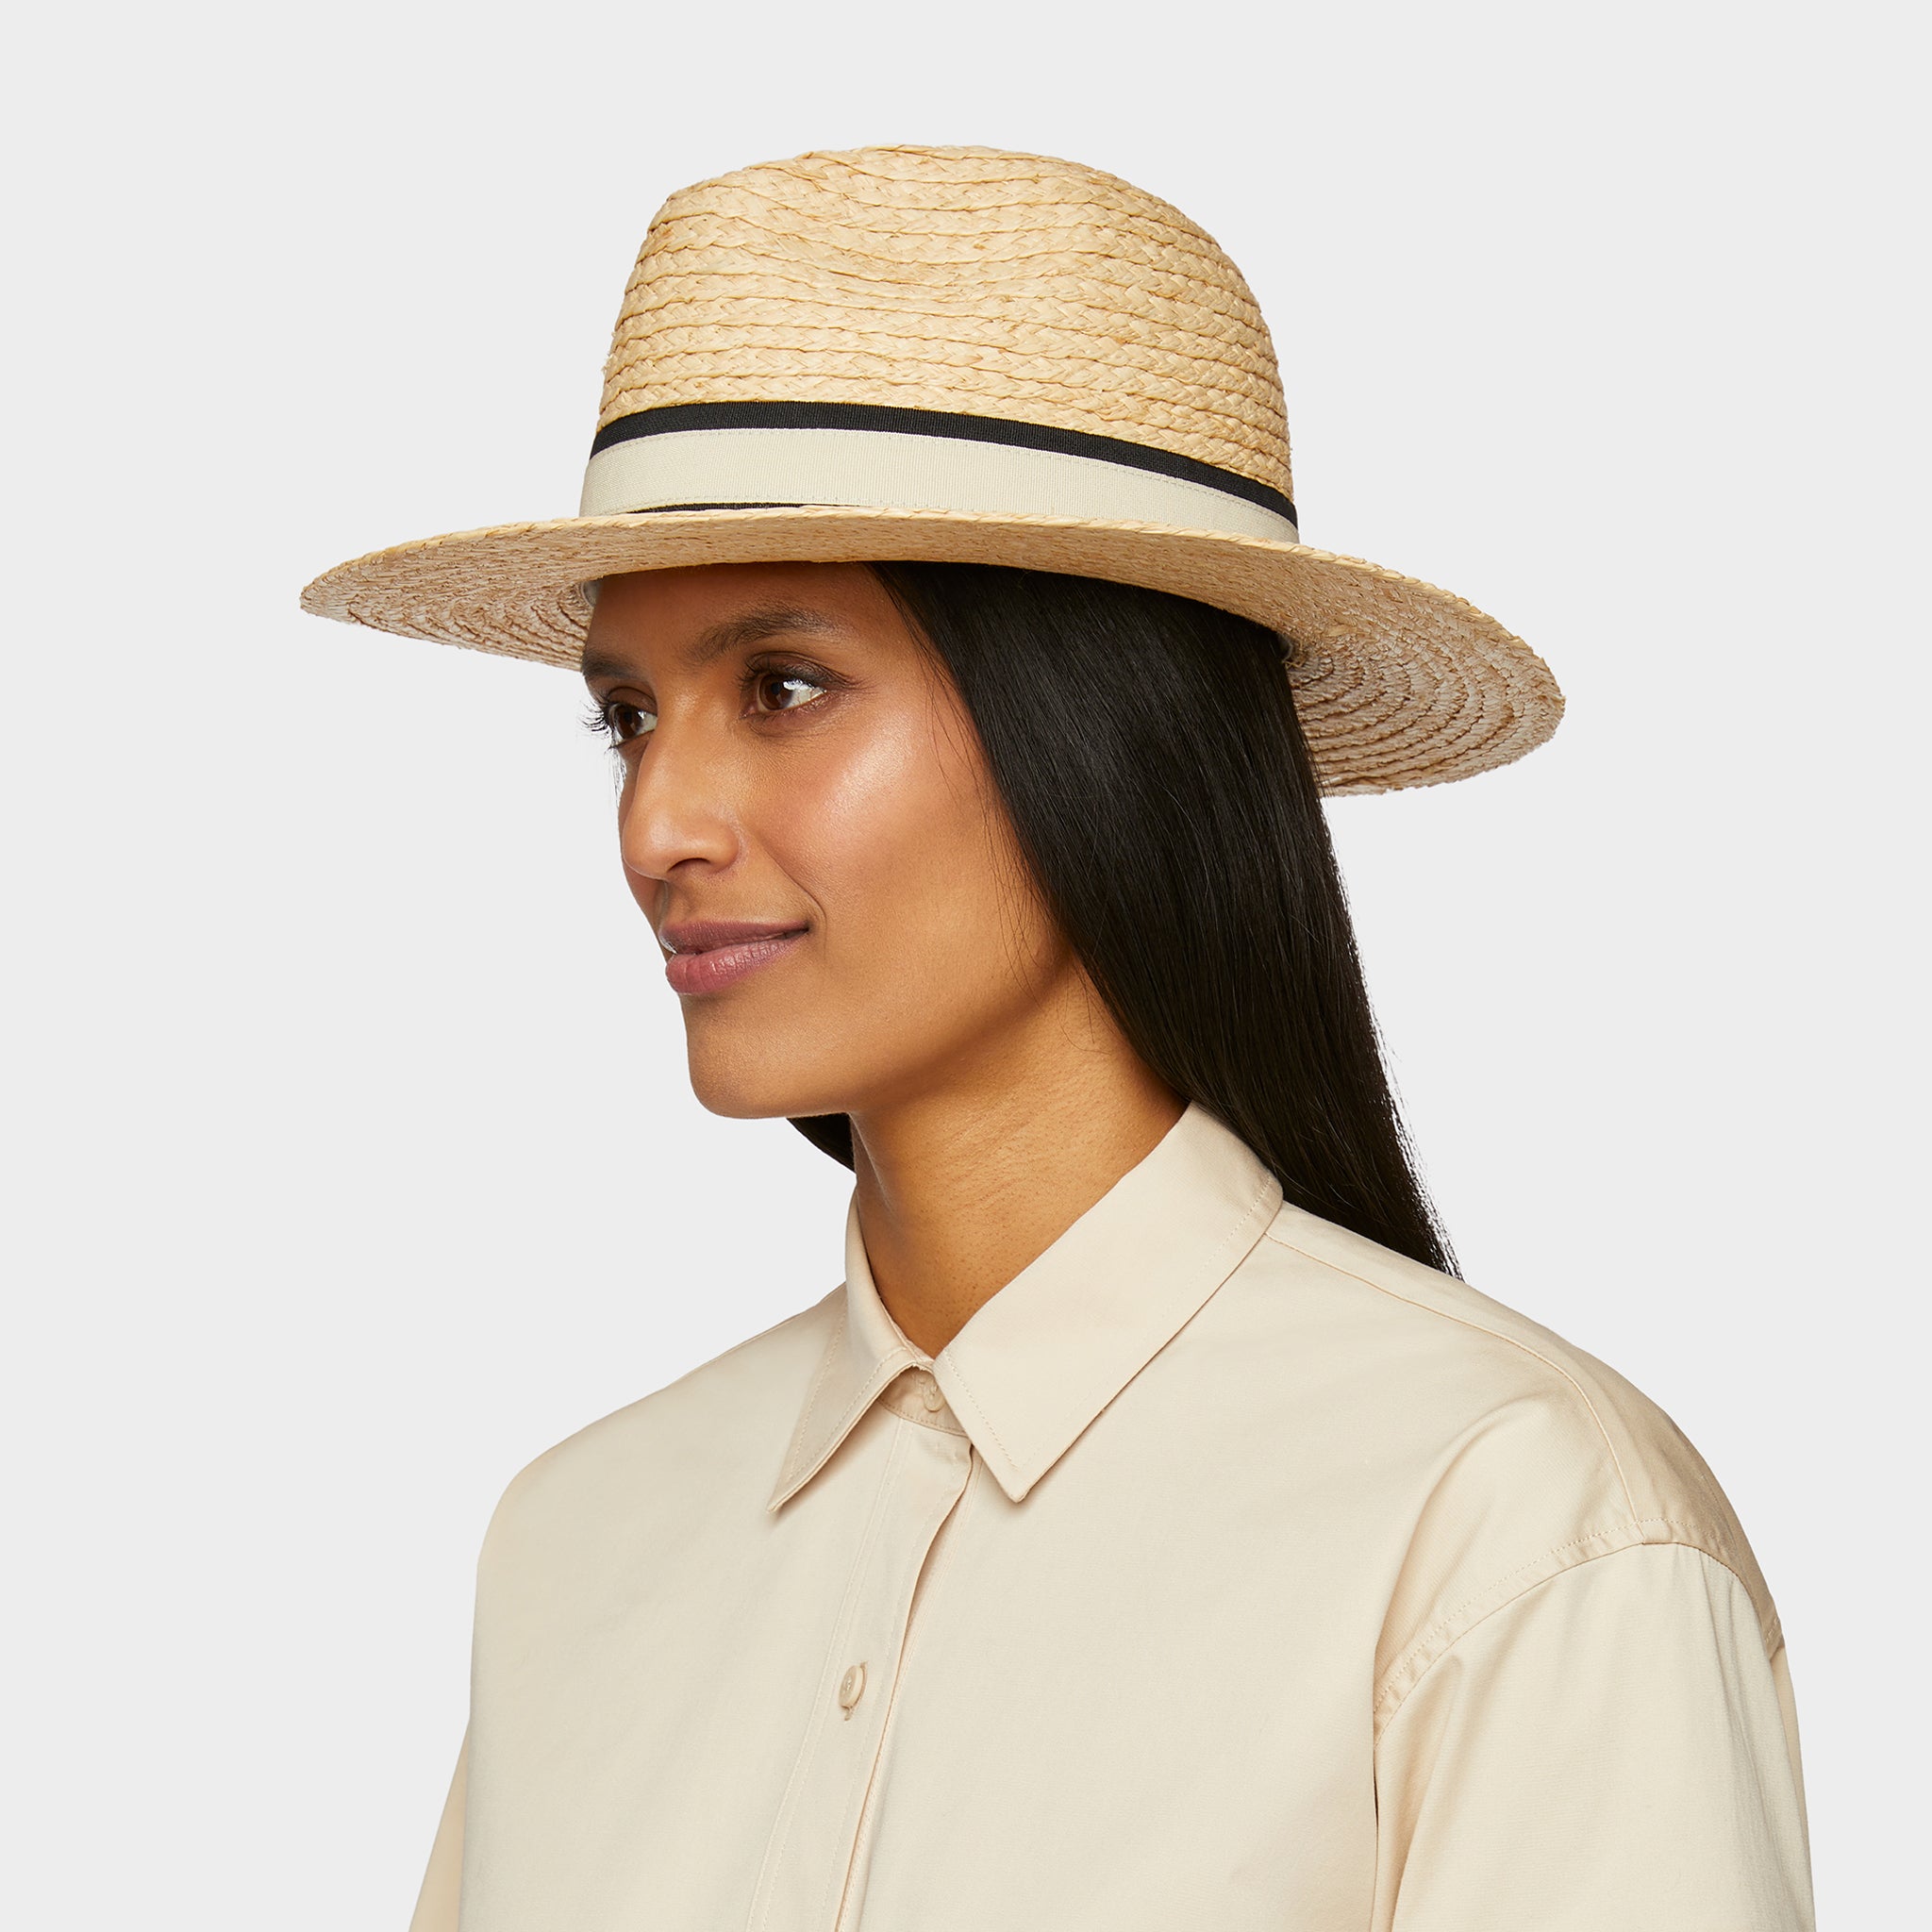 Women's Spring and Summer Hats :: BeauChapeau Hat Shop